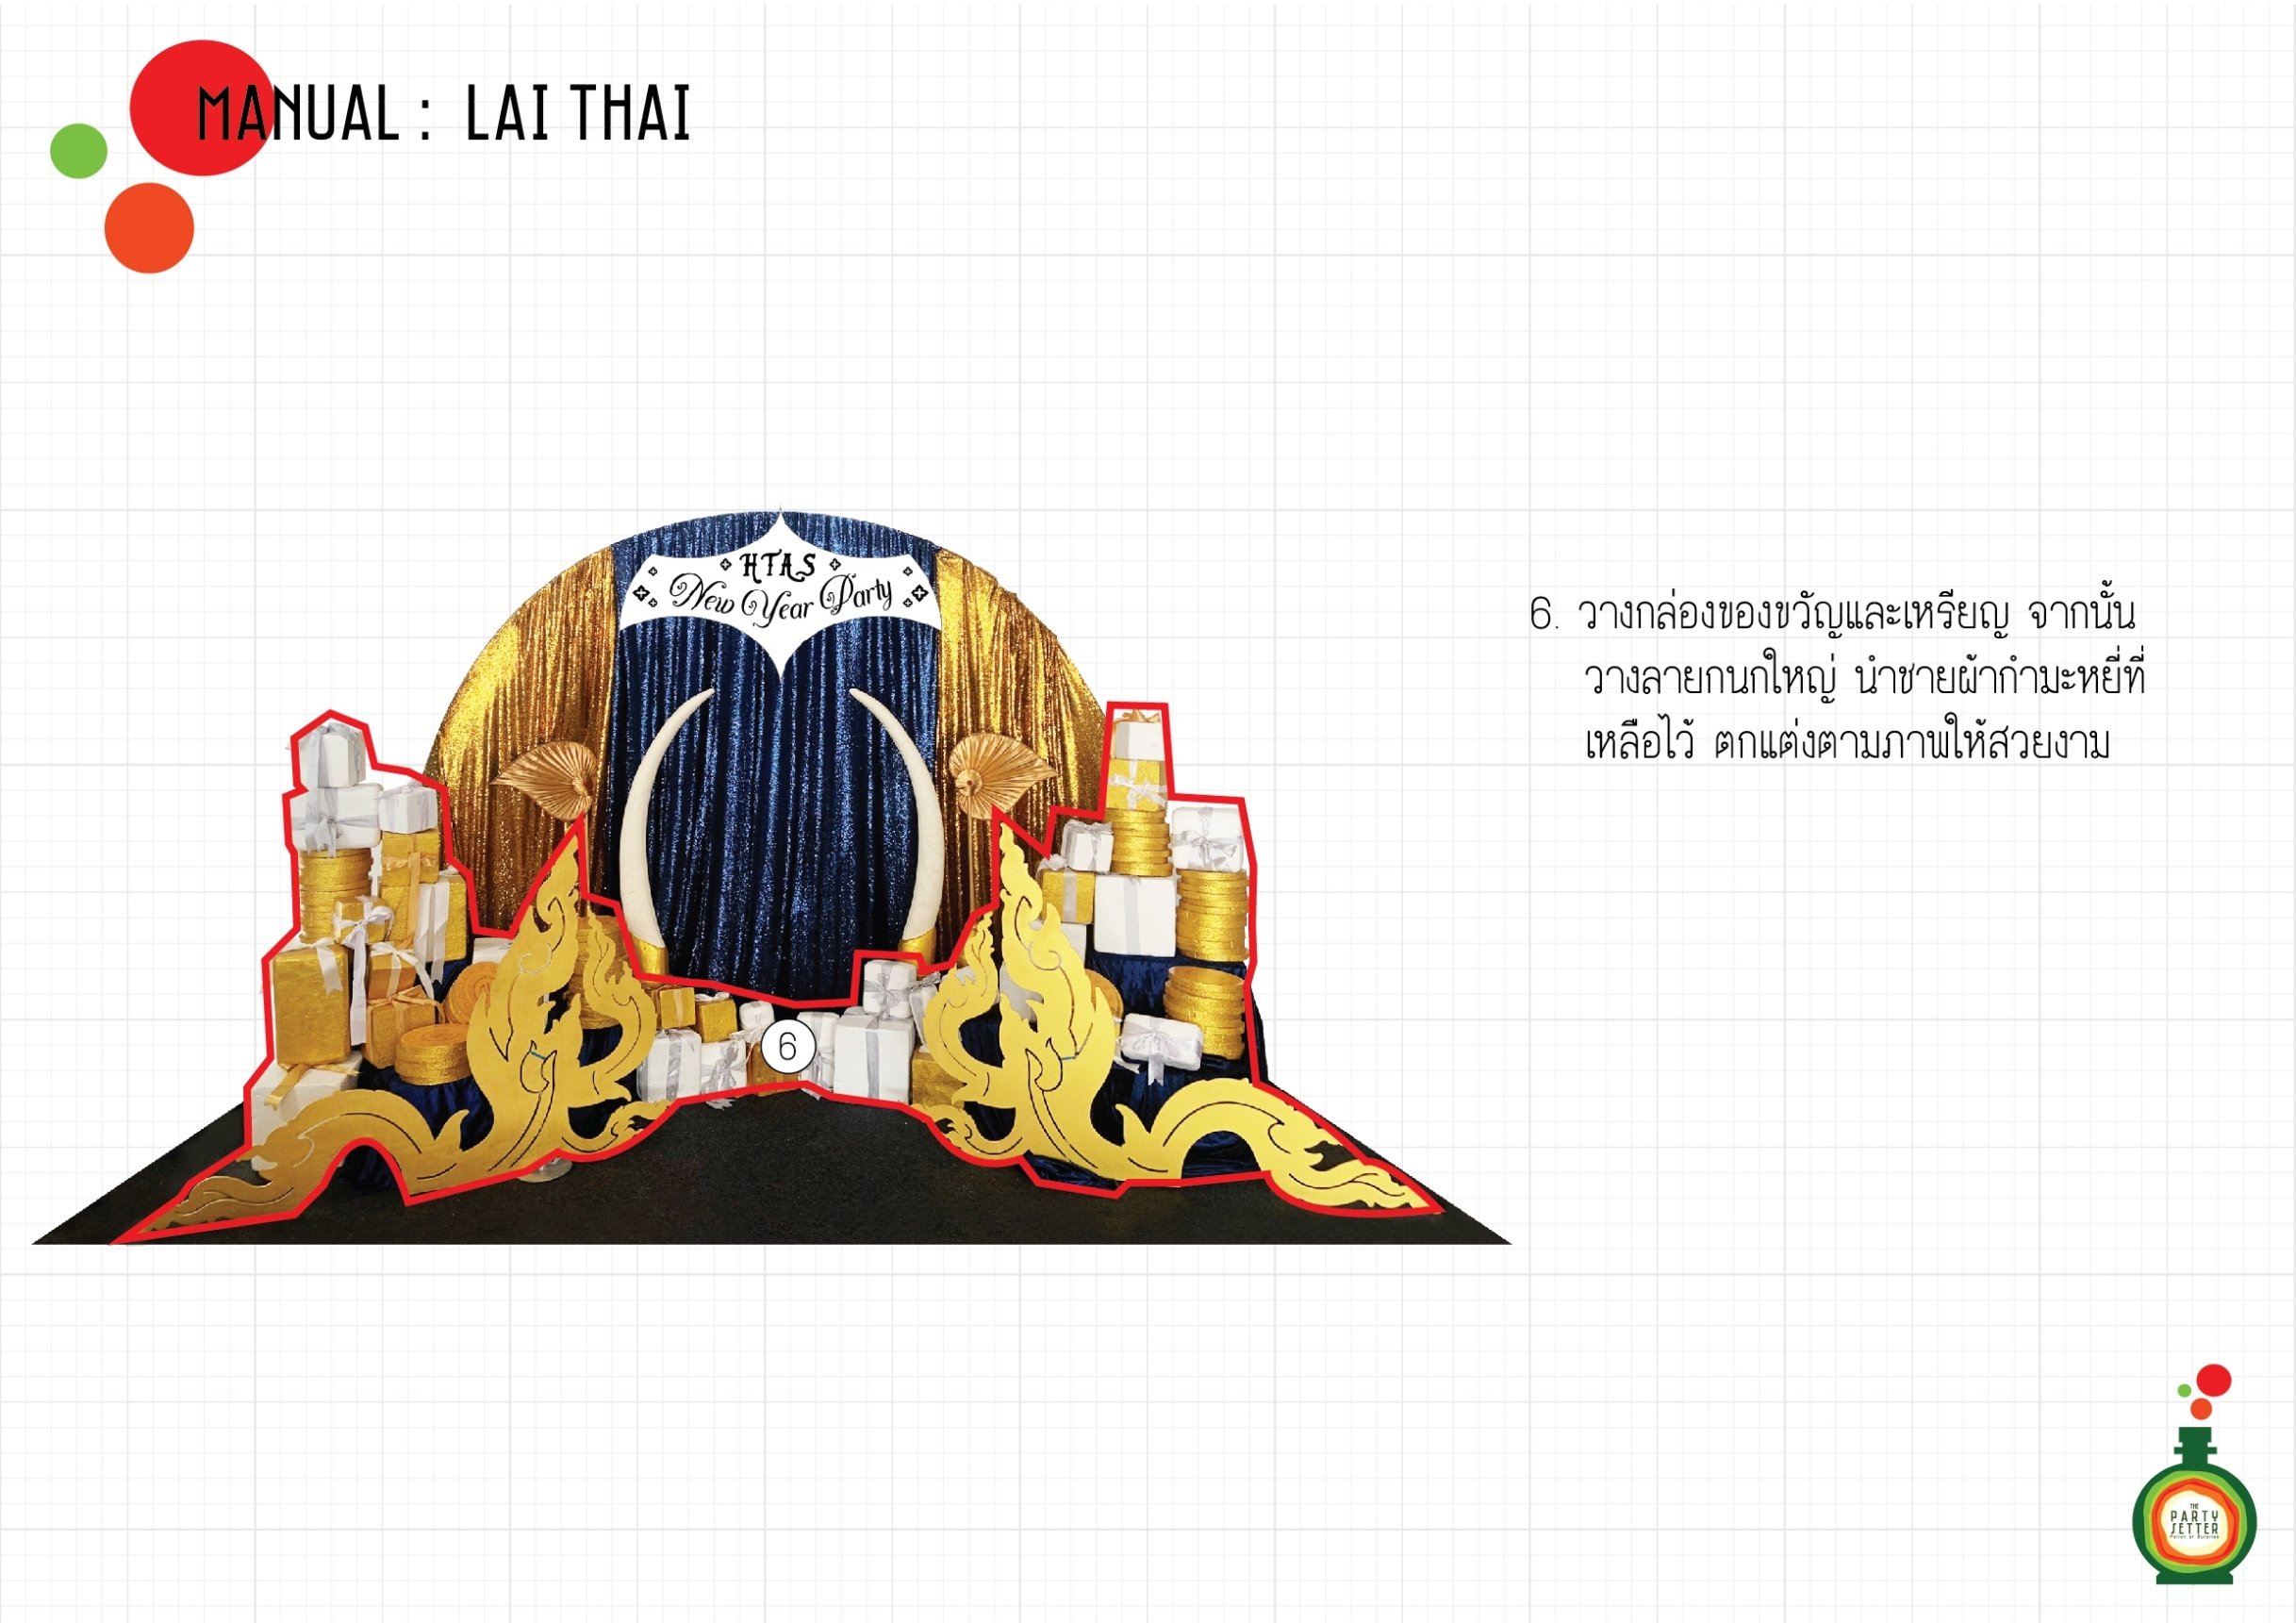 Manual_Lai Thai_06-01.jpg